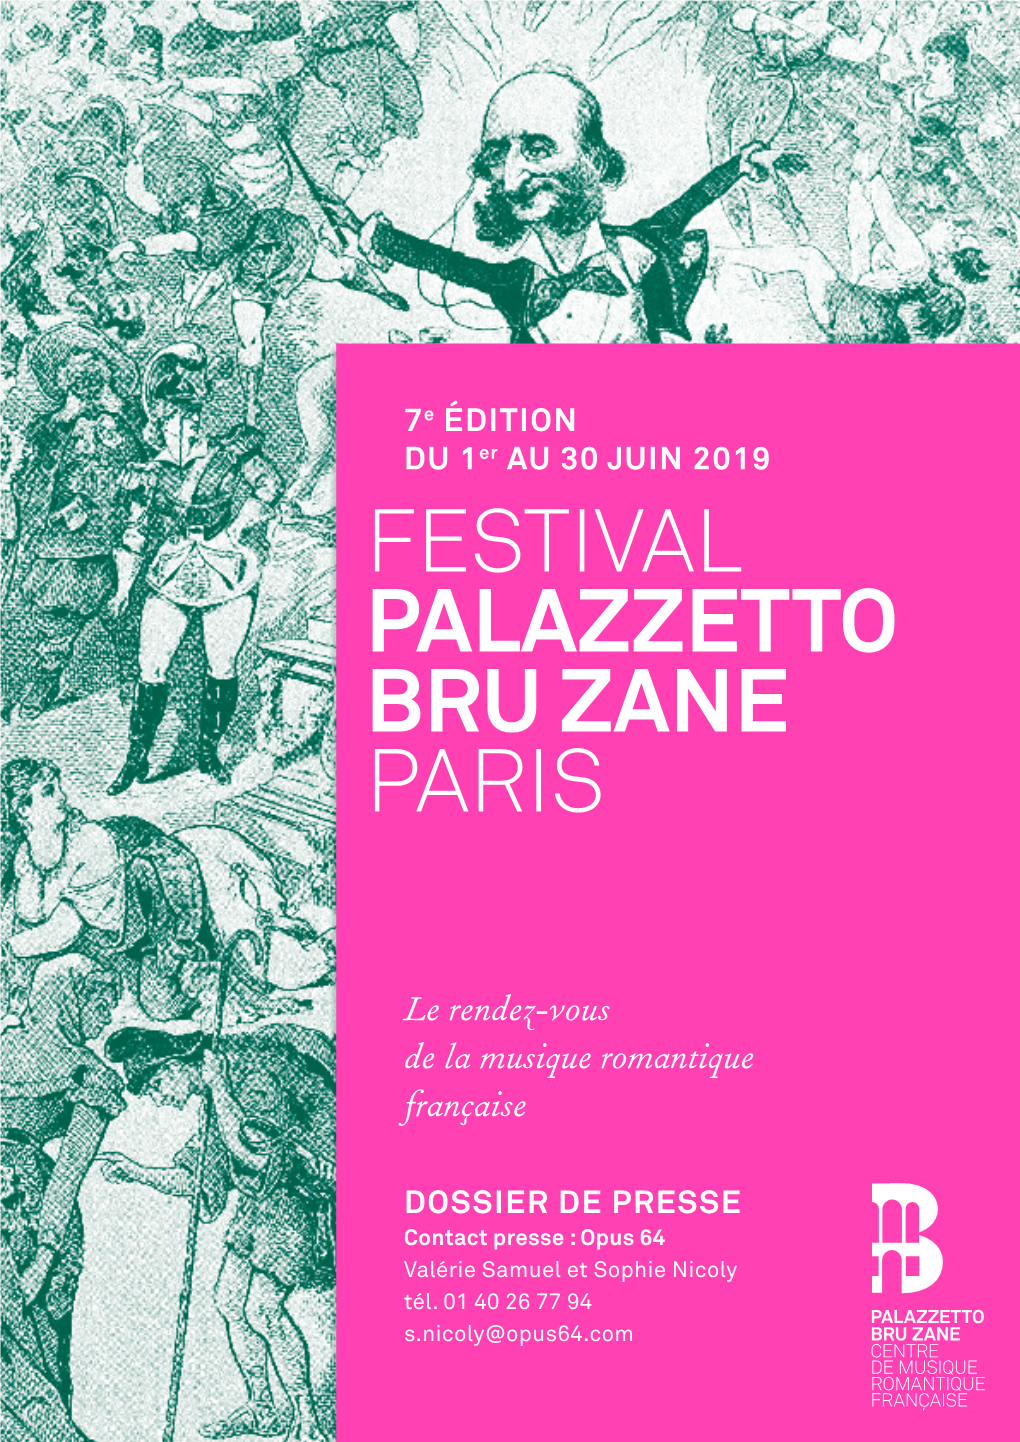 Festival Palazzetto Bru Zane Paris